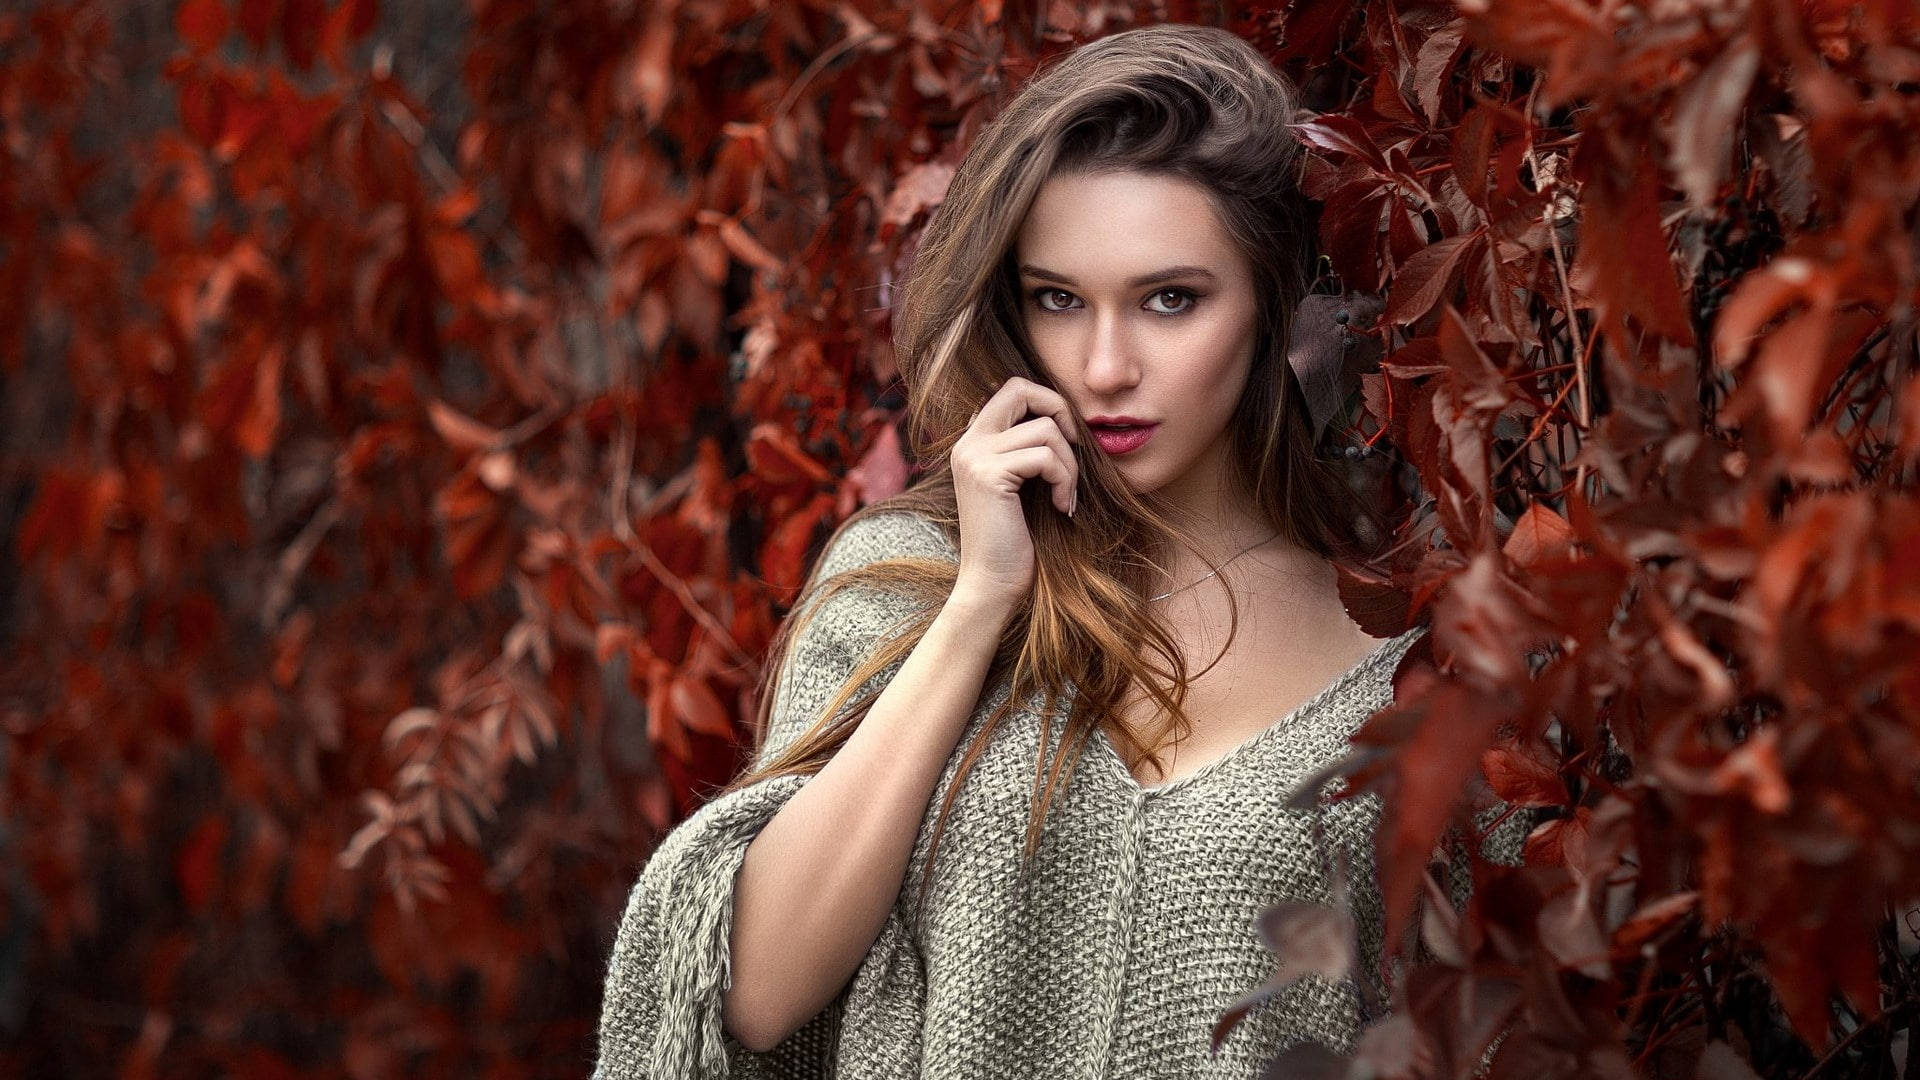 Pretty Model During Autumn Macbook Wallpaper